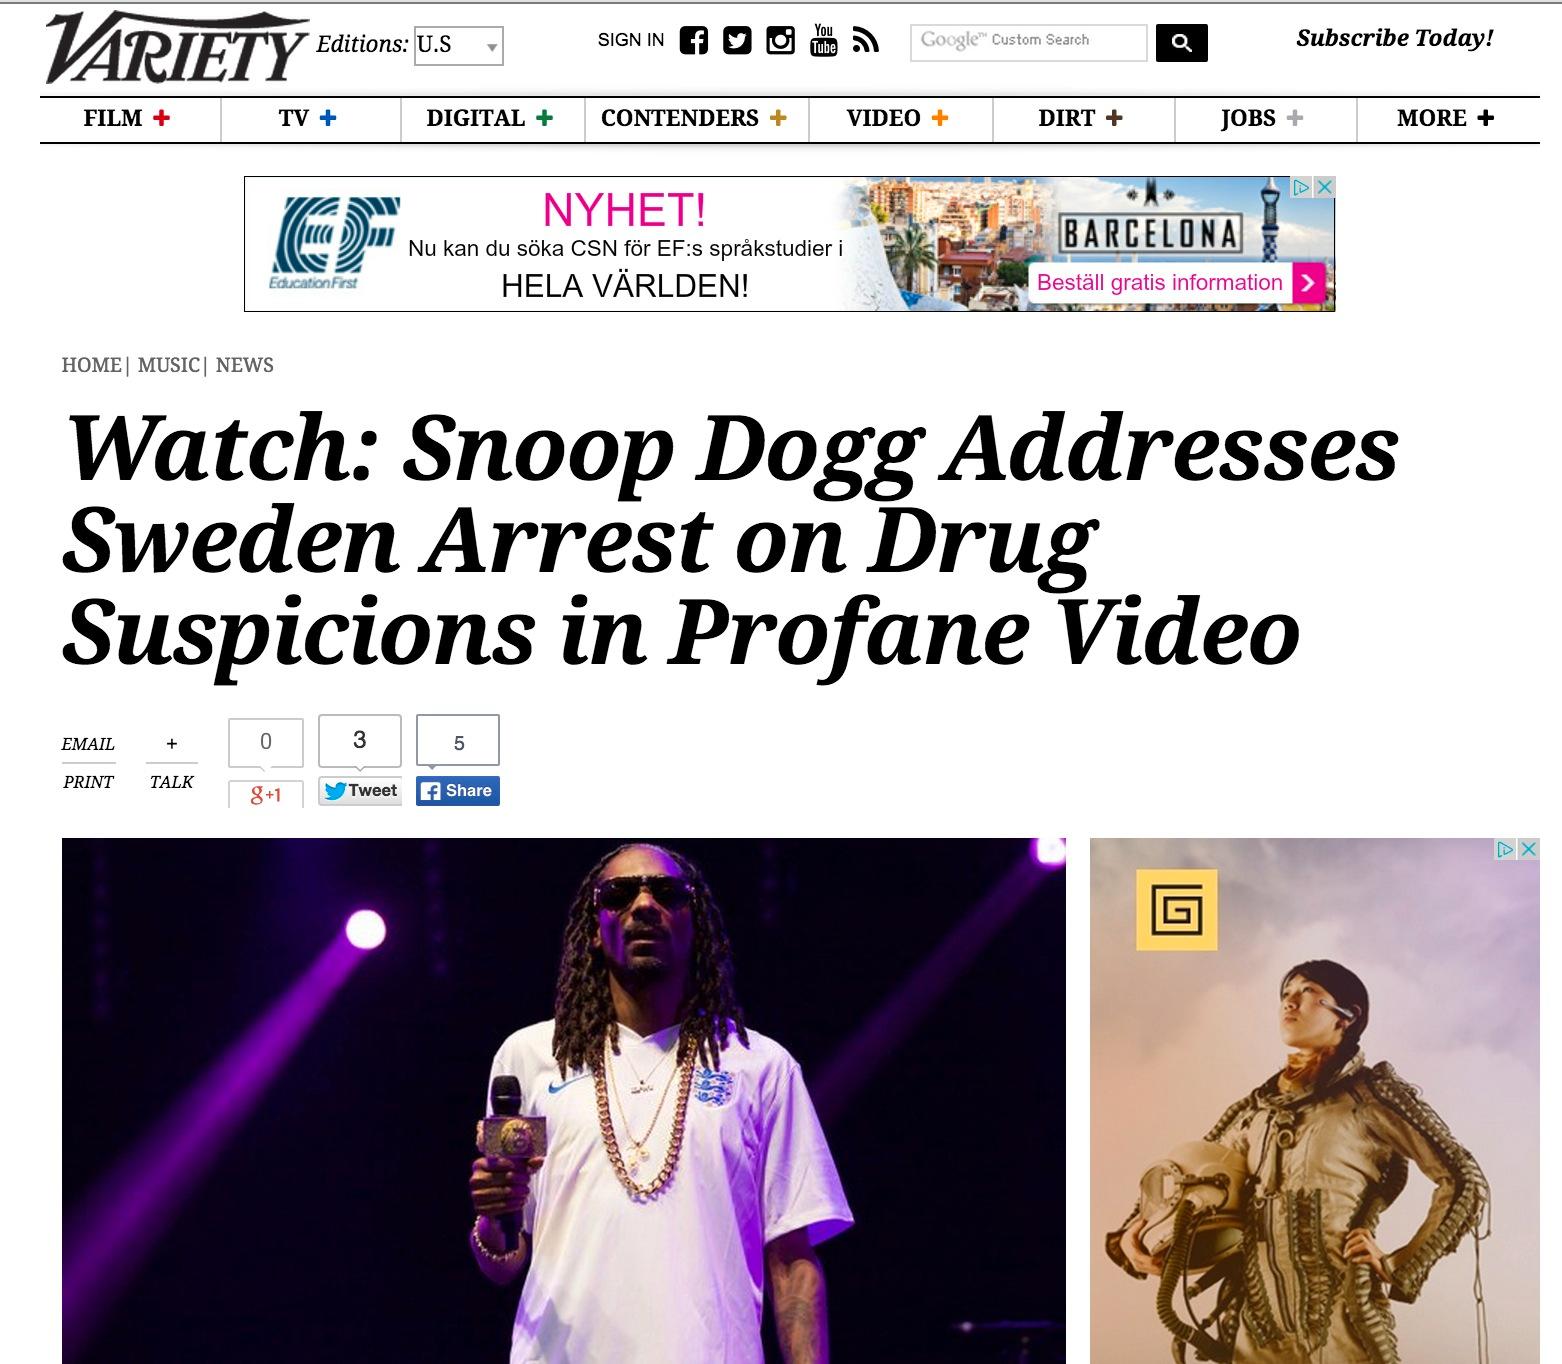 Variety Watch: Snoop Dogg Addresses Sweden Arrest on Drug Suspicions in Profane Video